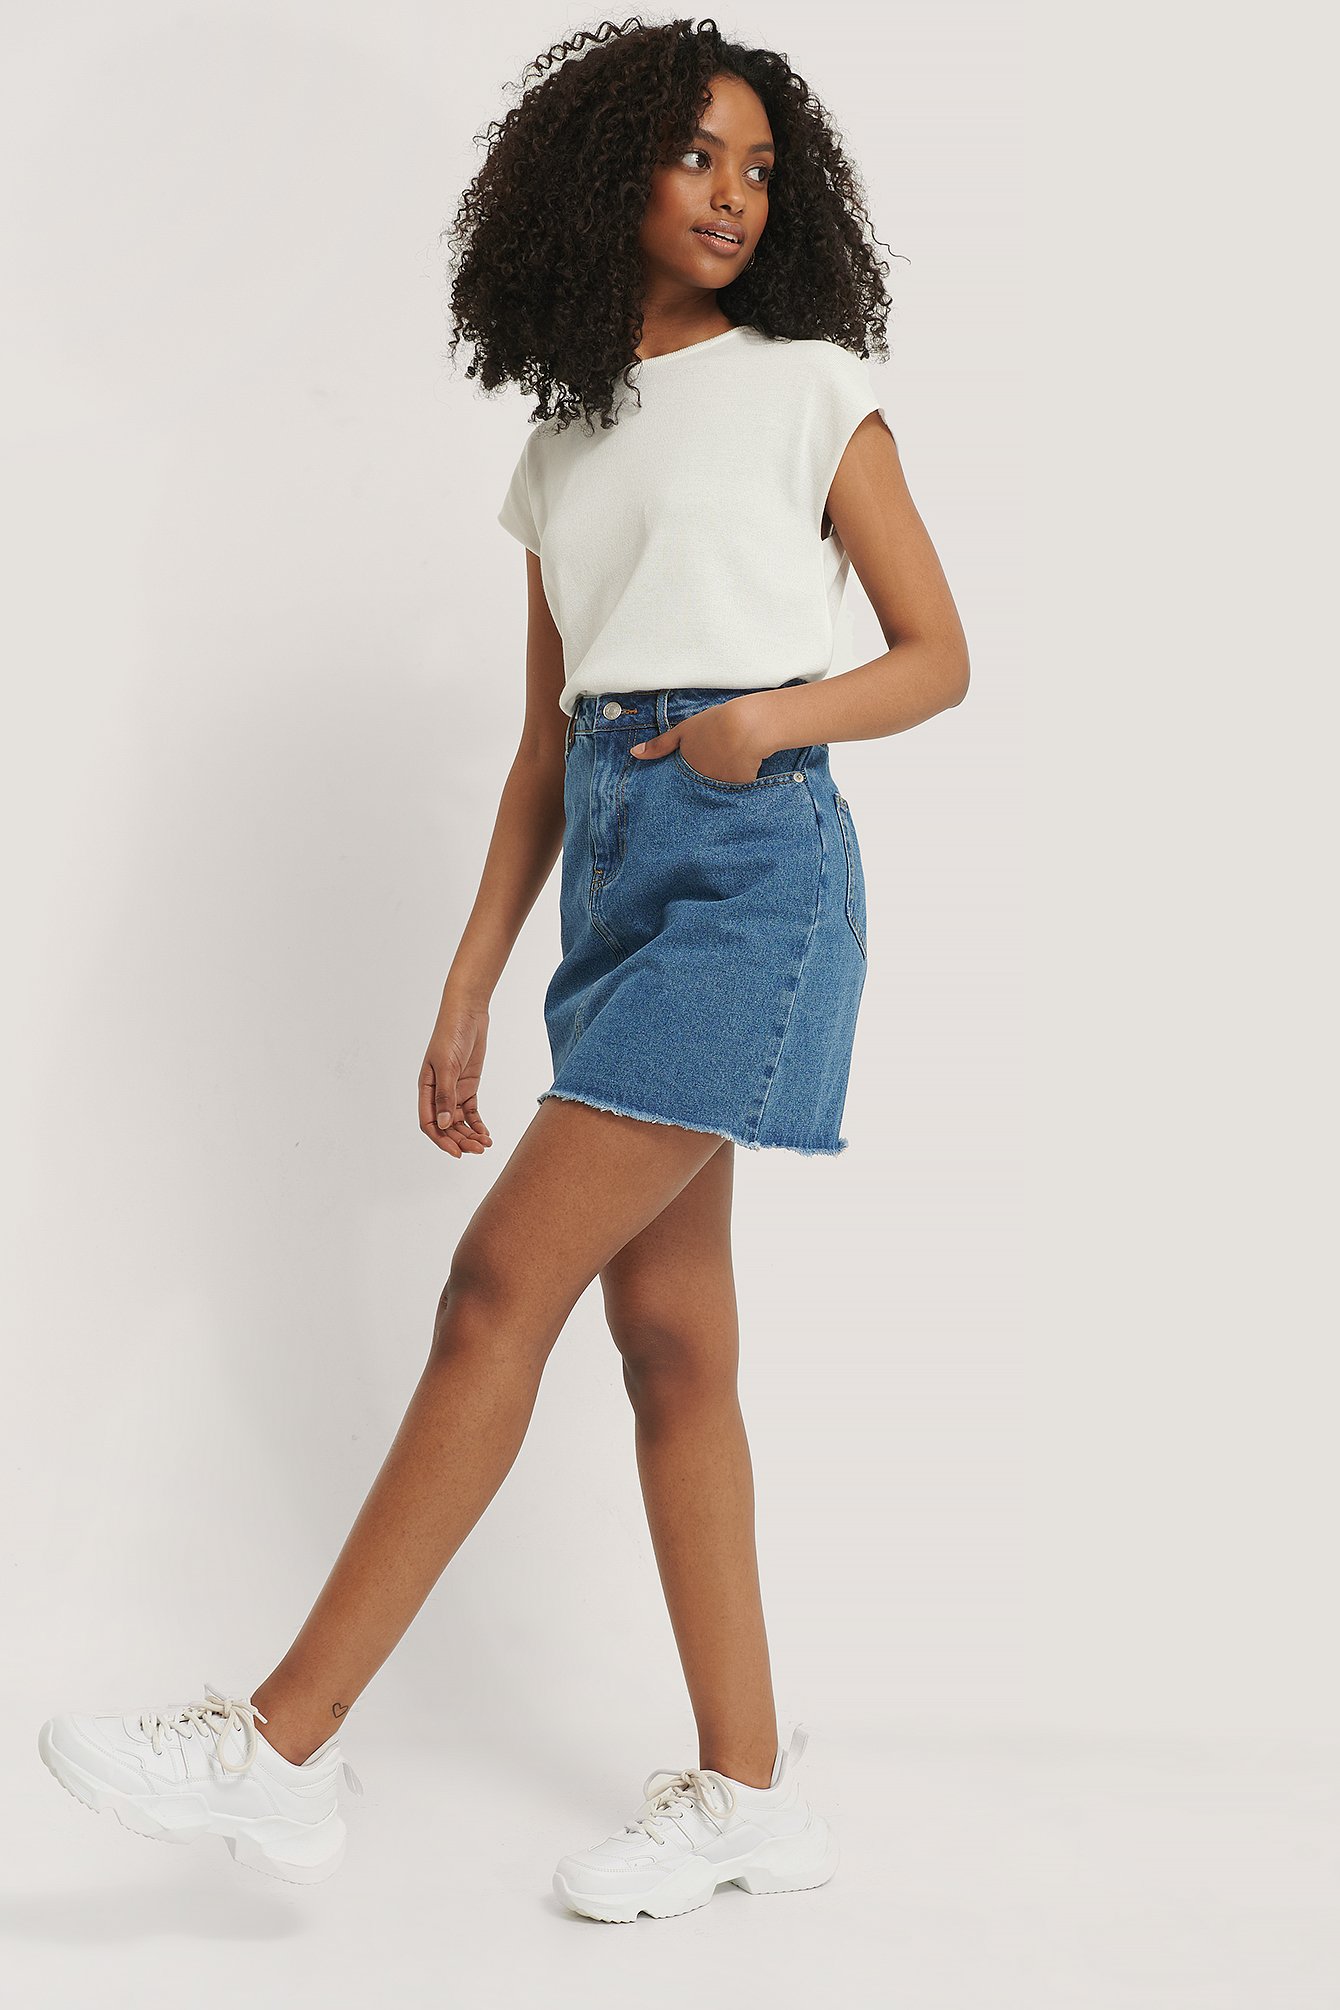 Mini Denim Skirt Outfit.